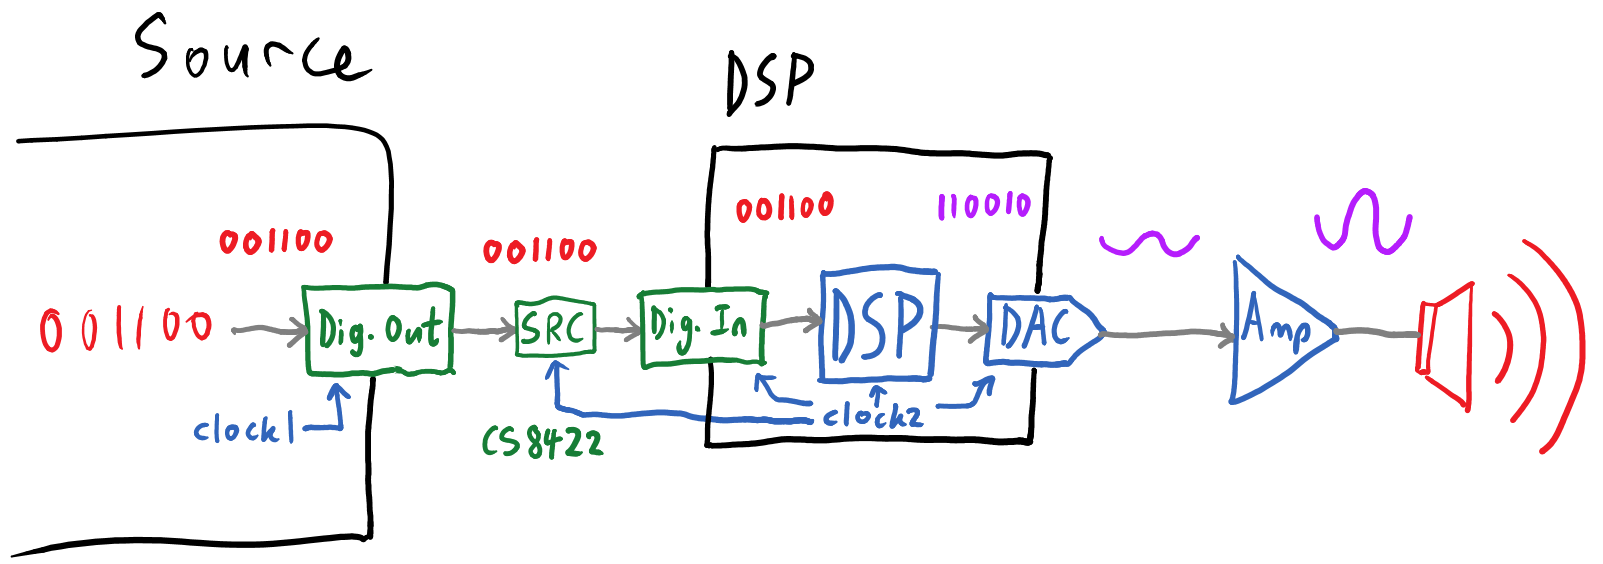 DSP 01: hi-fi audio signal processor | Hackaday.io